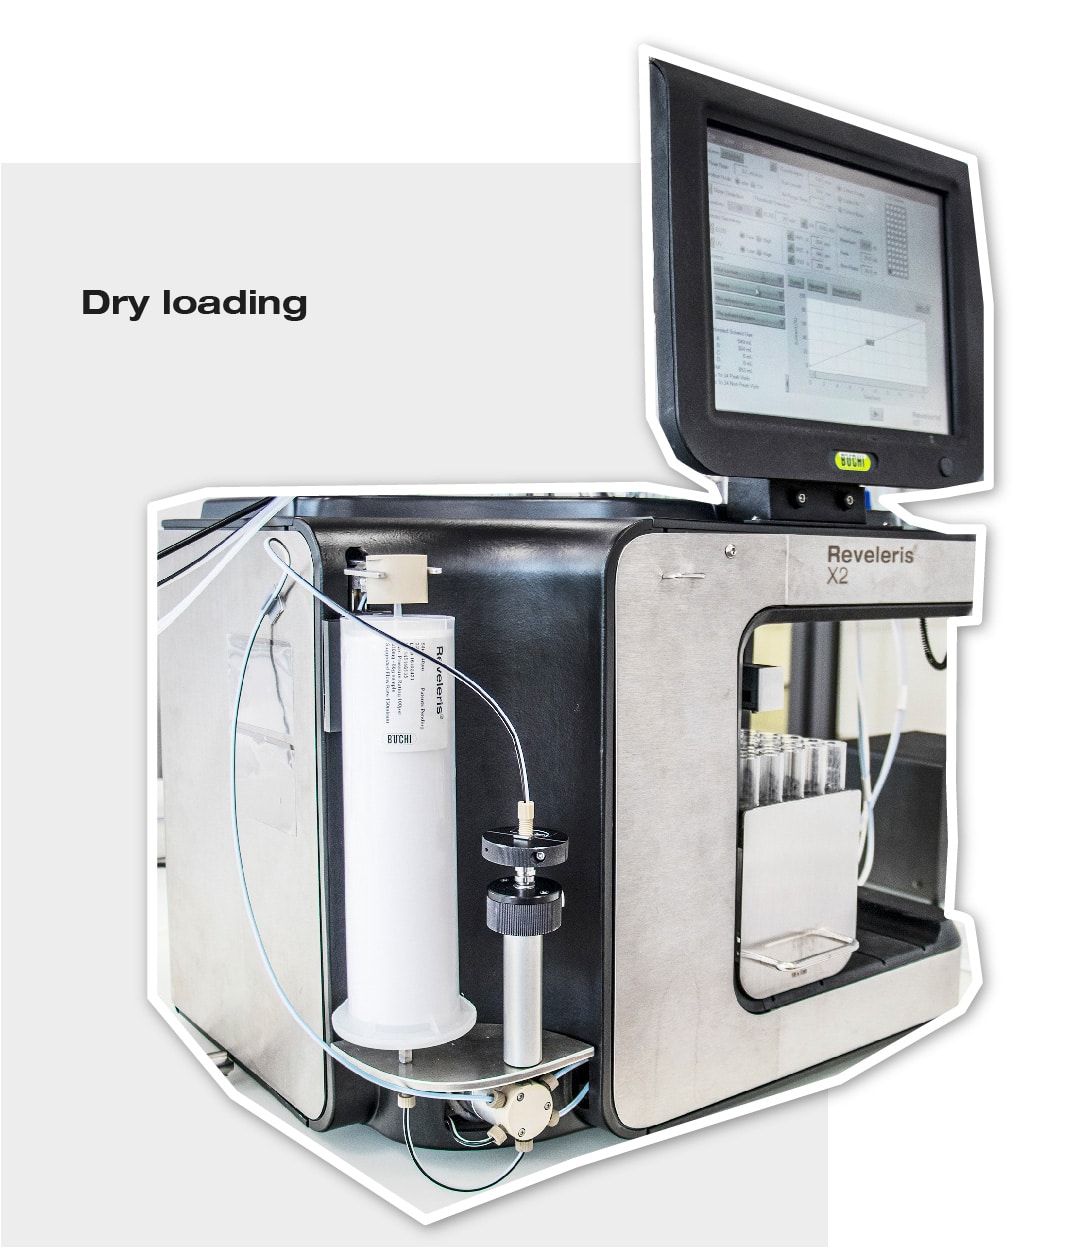 Image of how Dry Sample Loading looks like in a Reveleris flash chromatography system